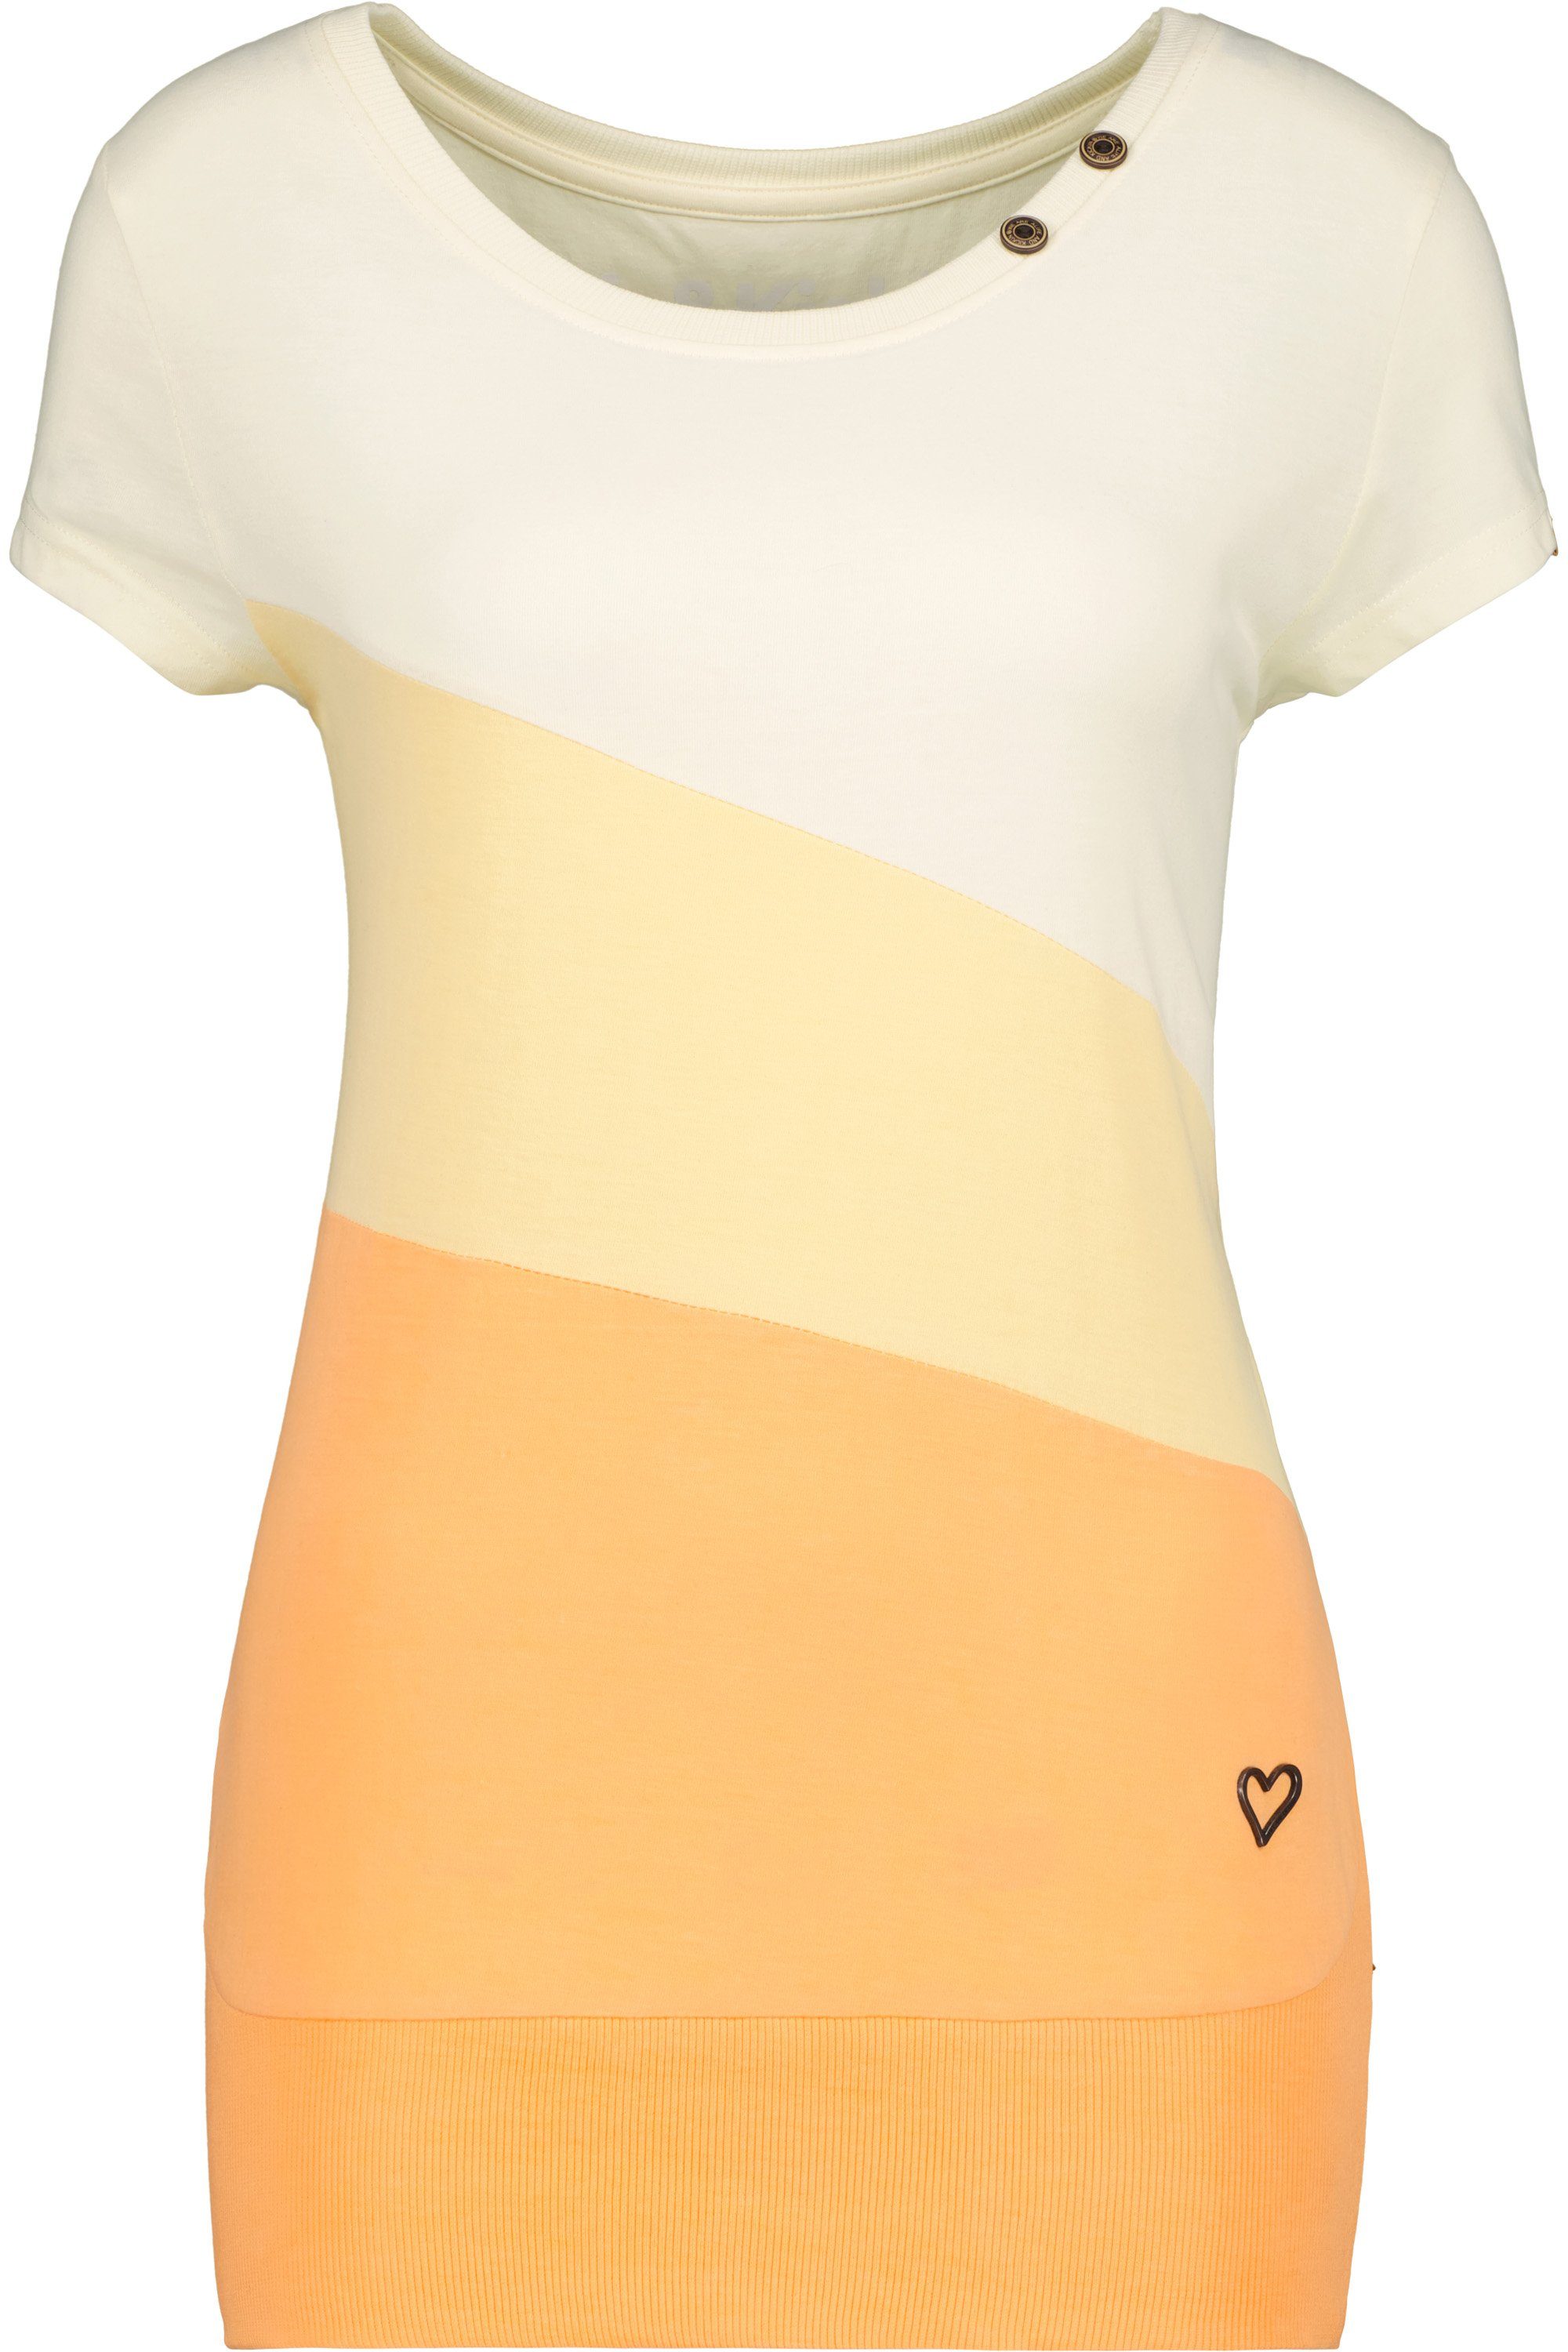 CordelieAK Damen Alife & Shirt Shirt melange tangerine A Kurzarmshirt, Rundhalsshirt Kickin